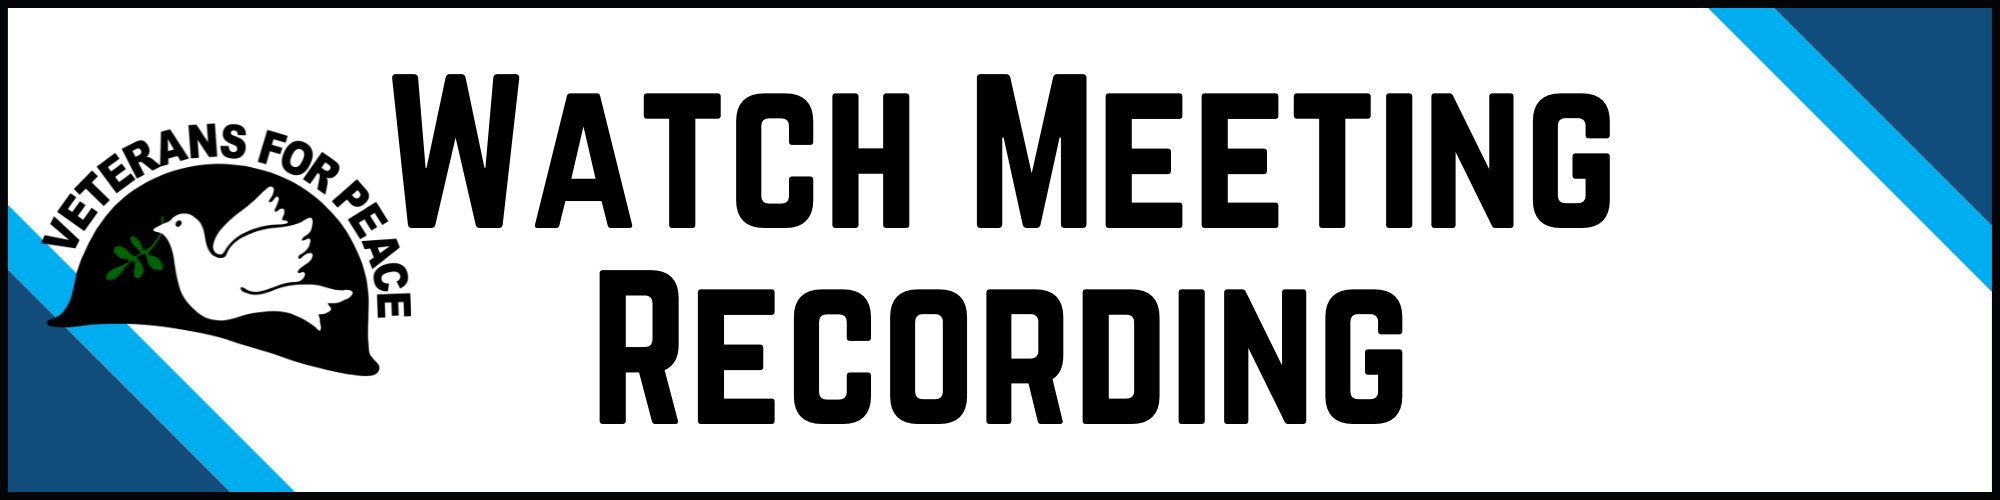 Watch Meeting Recording